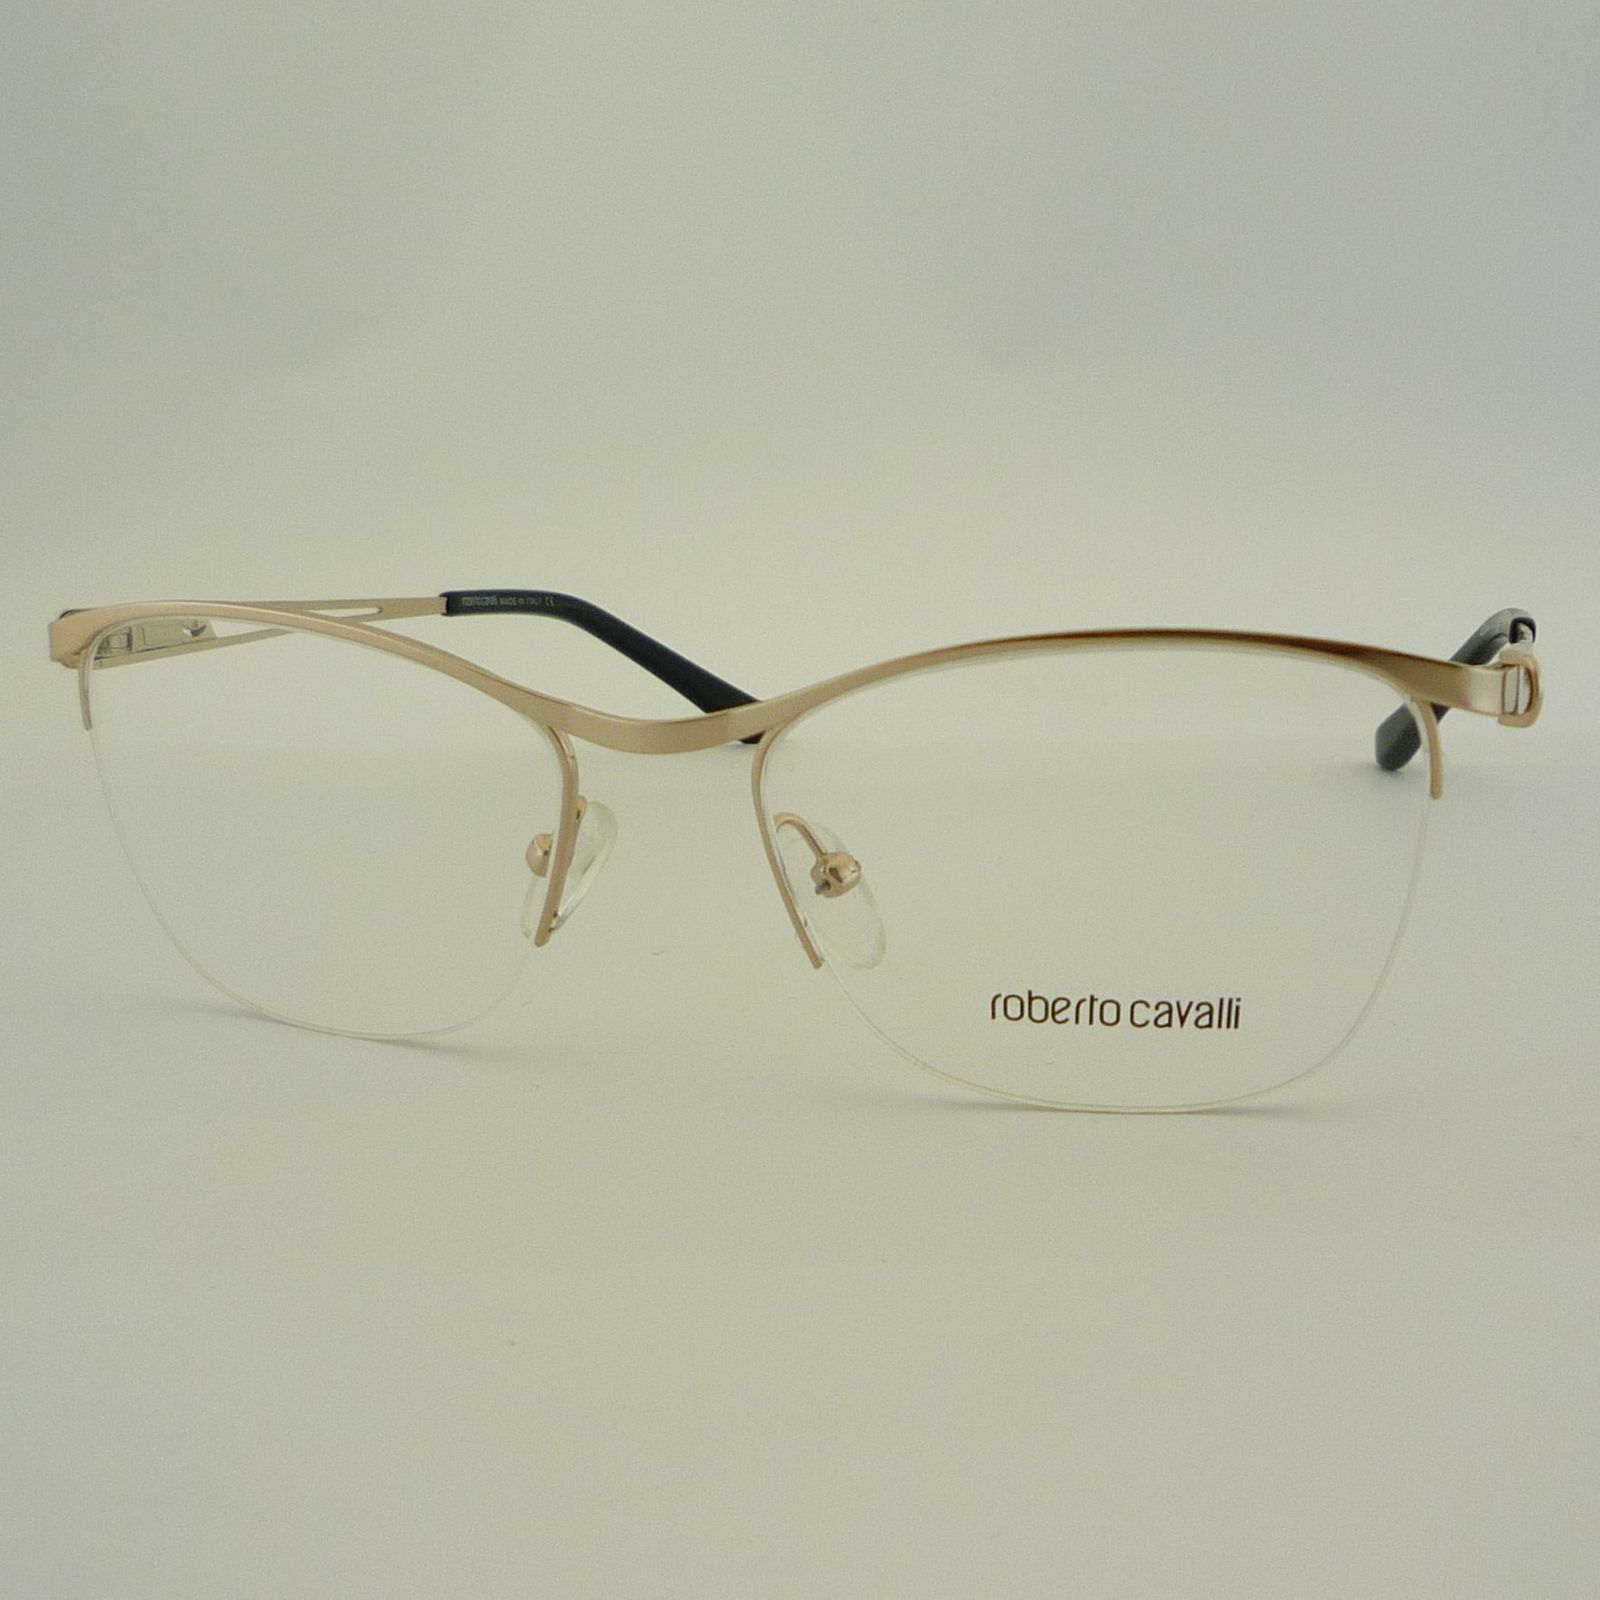 فریم عینک طبی زنانه روبرتو کاوالی مدل 45560223C1 -  - 3